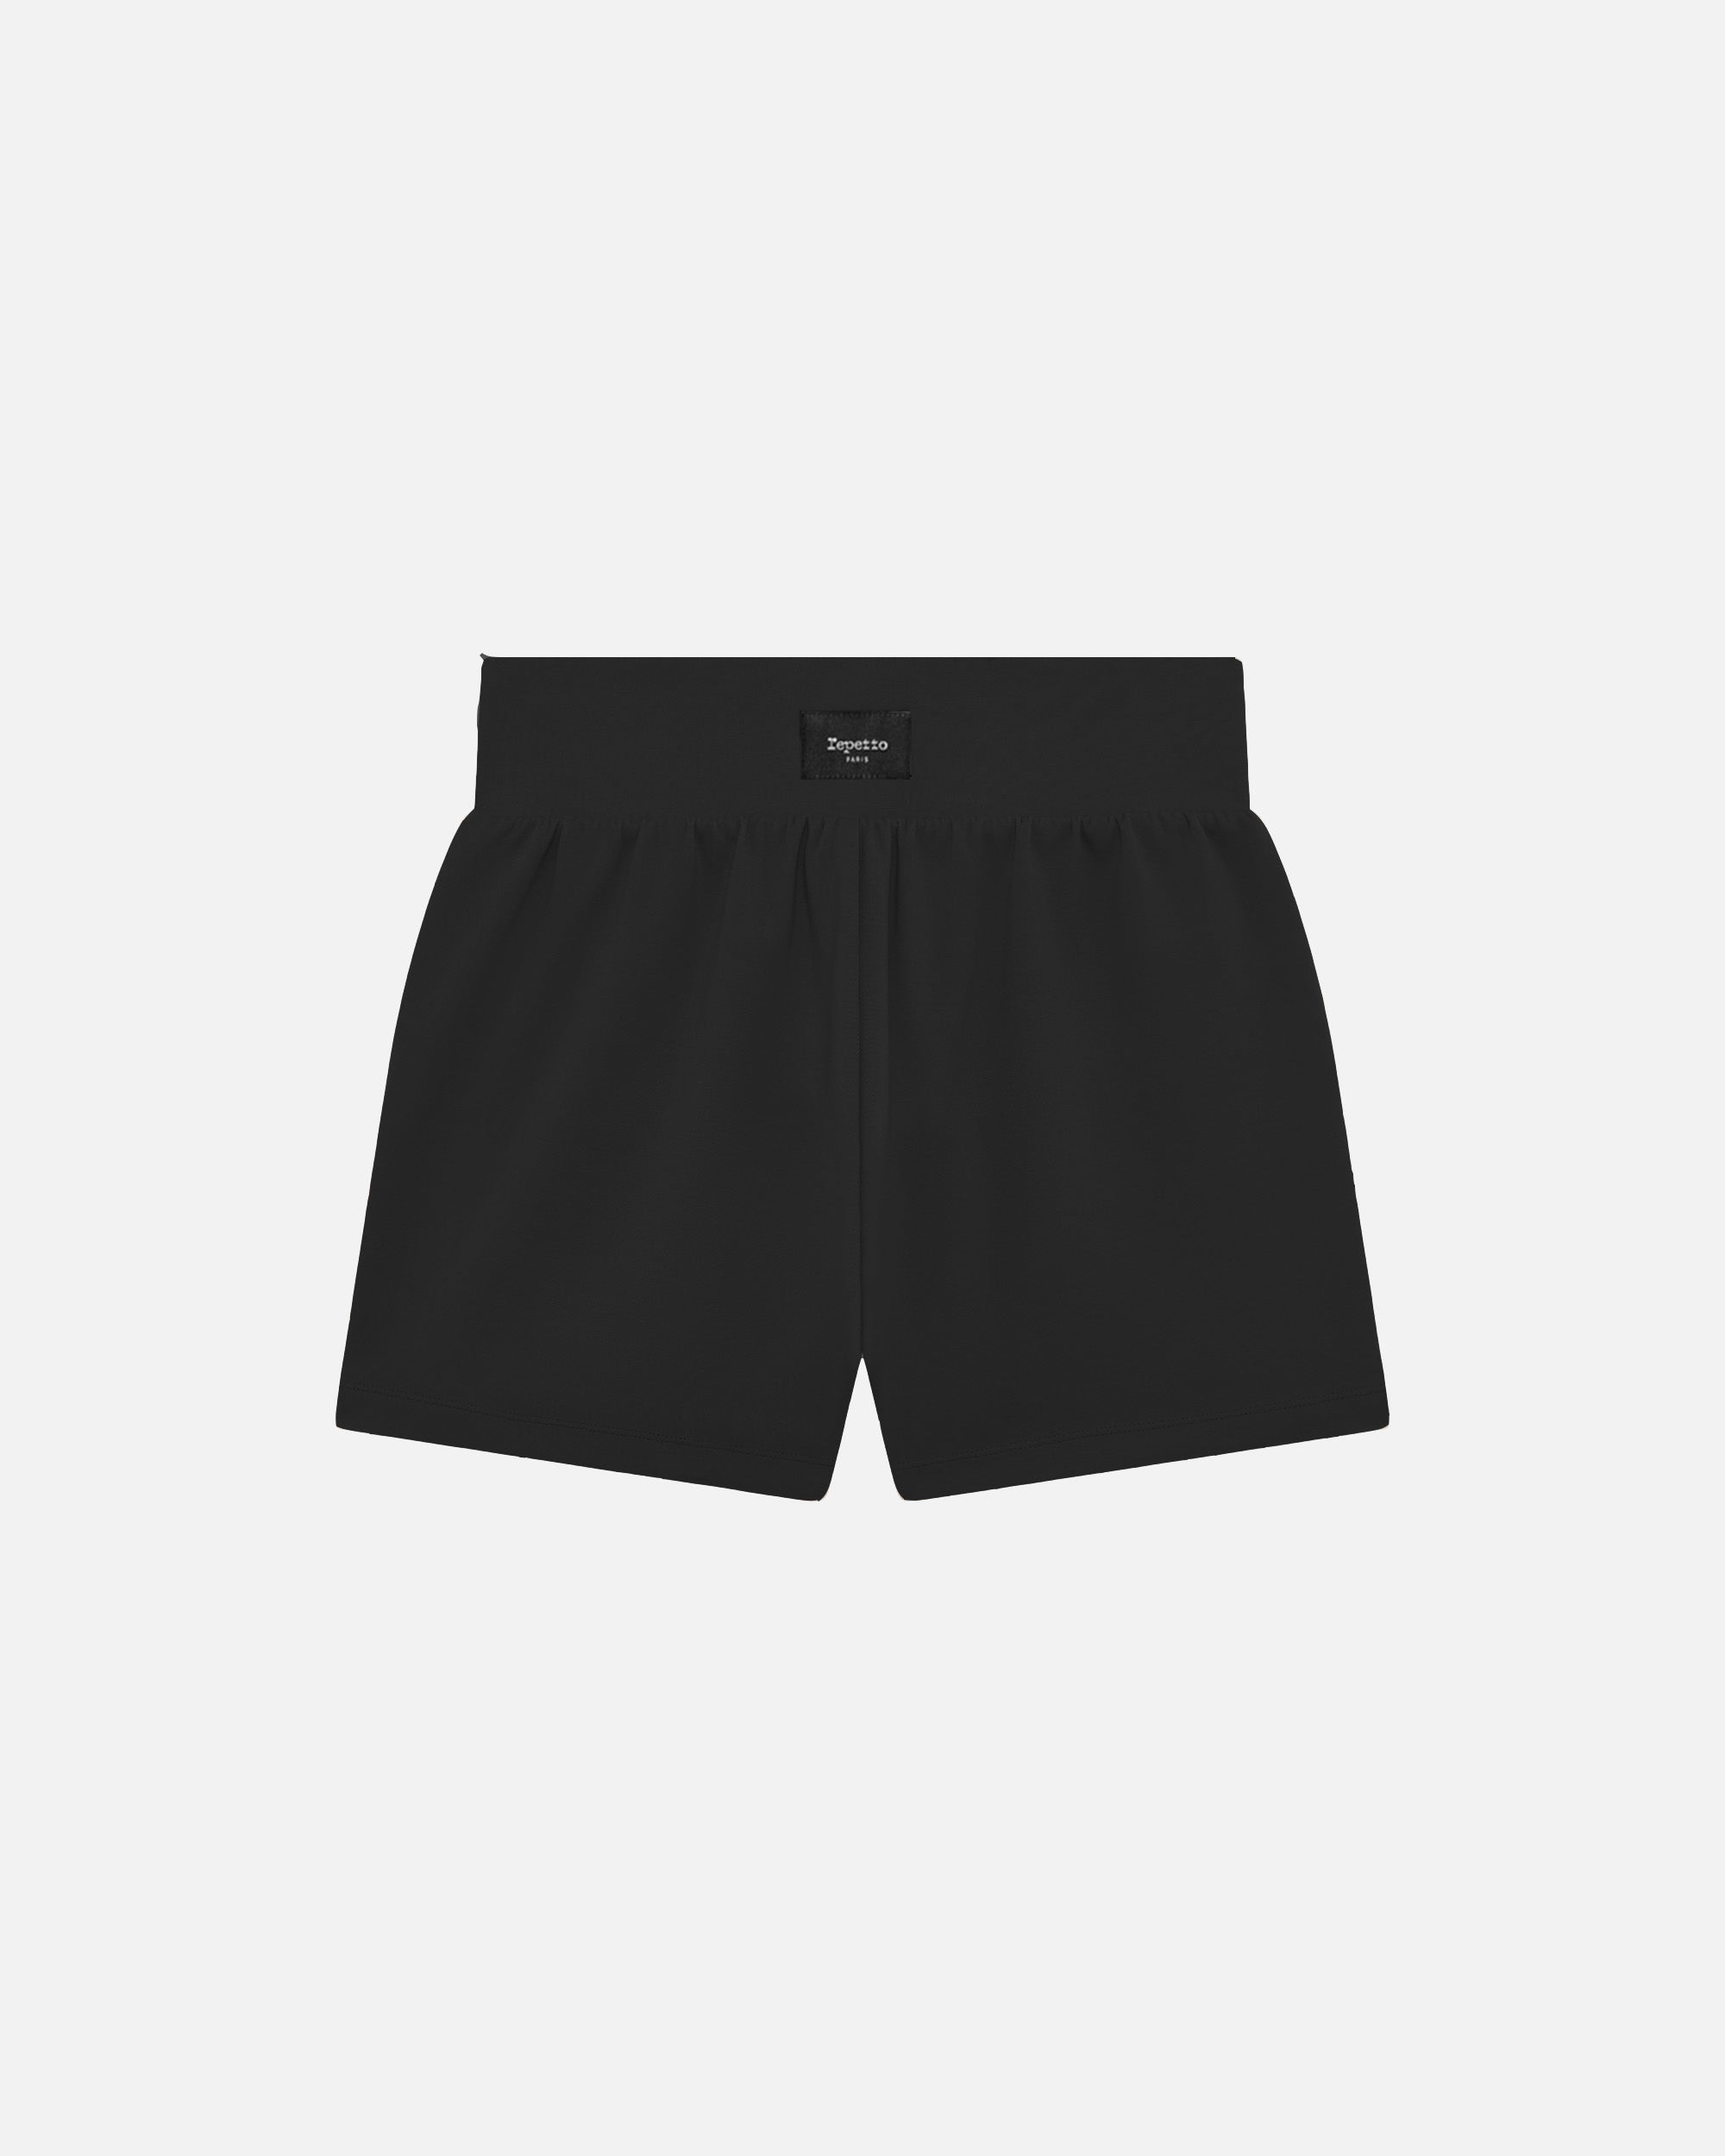 Scuba shorts